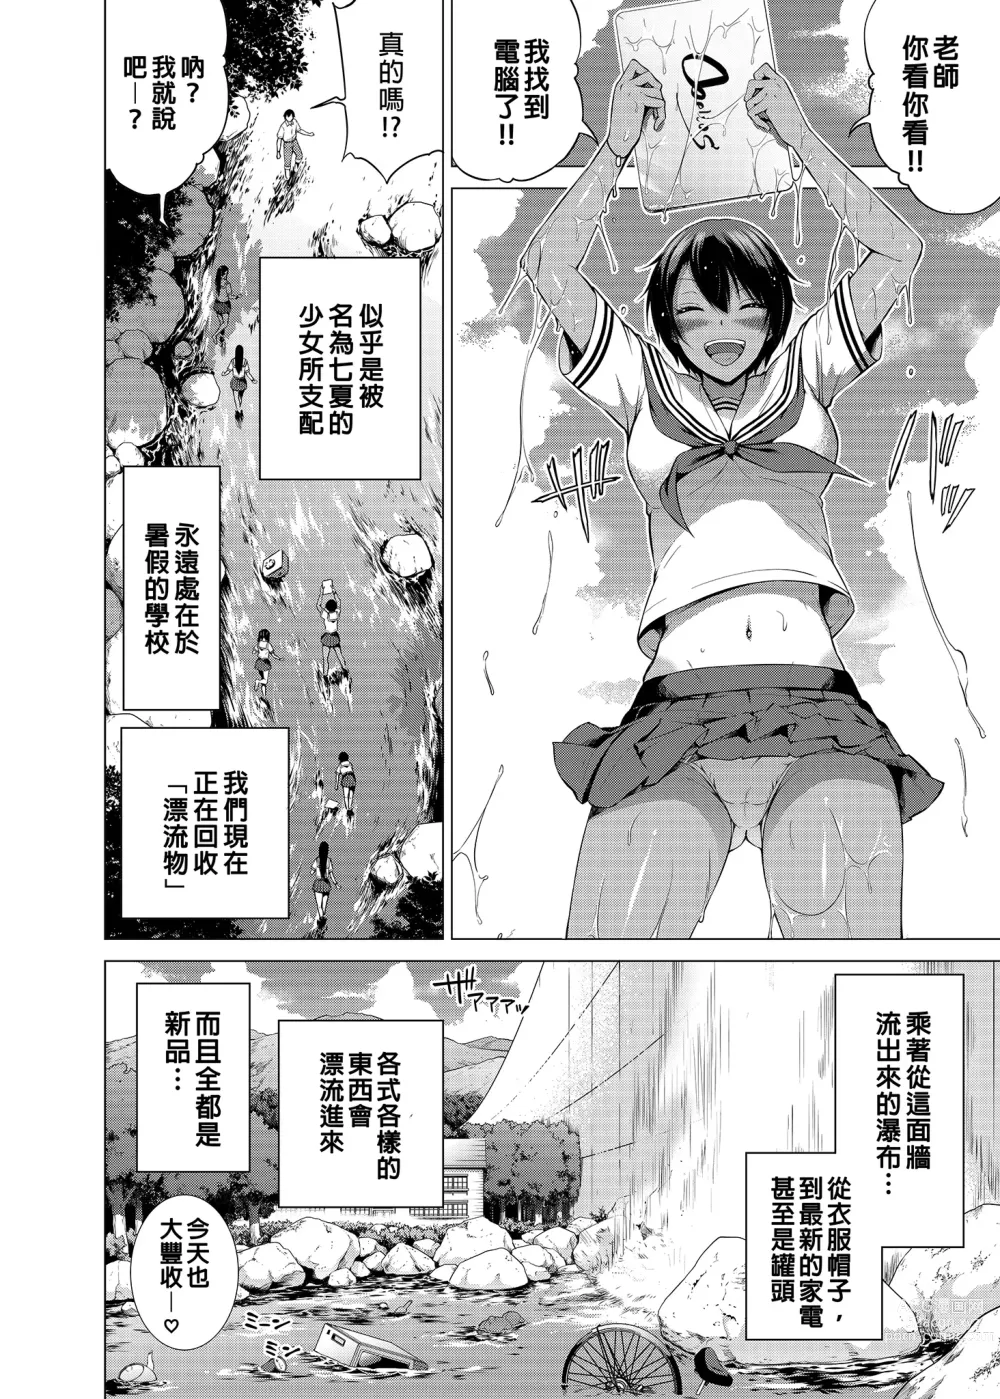 Page 3 of manga 七夏5